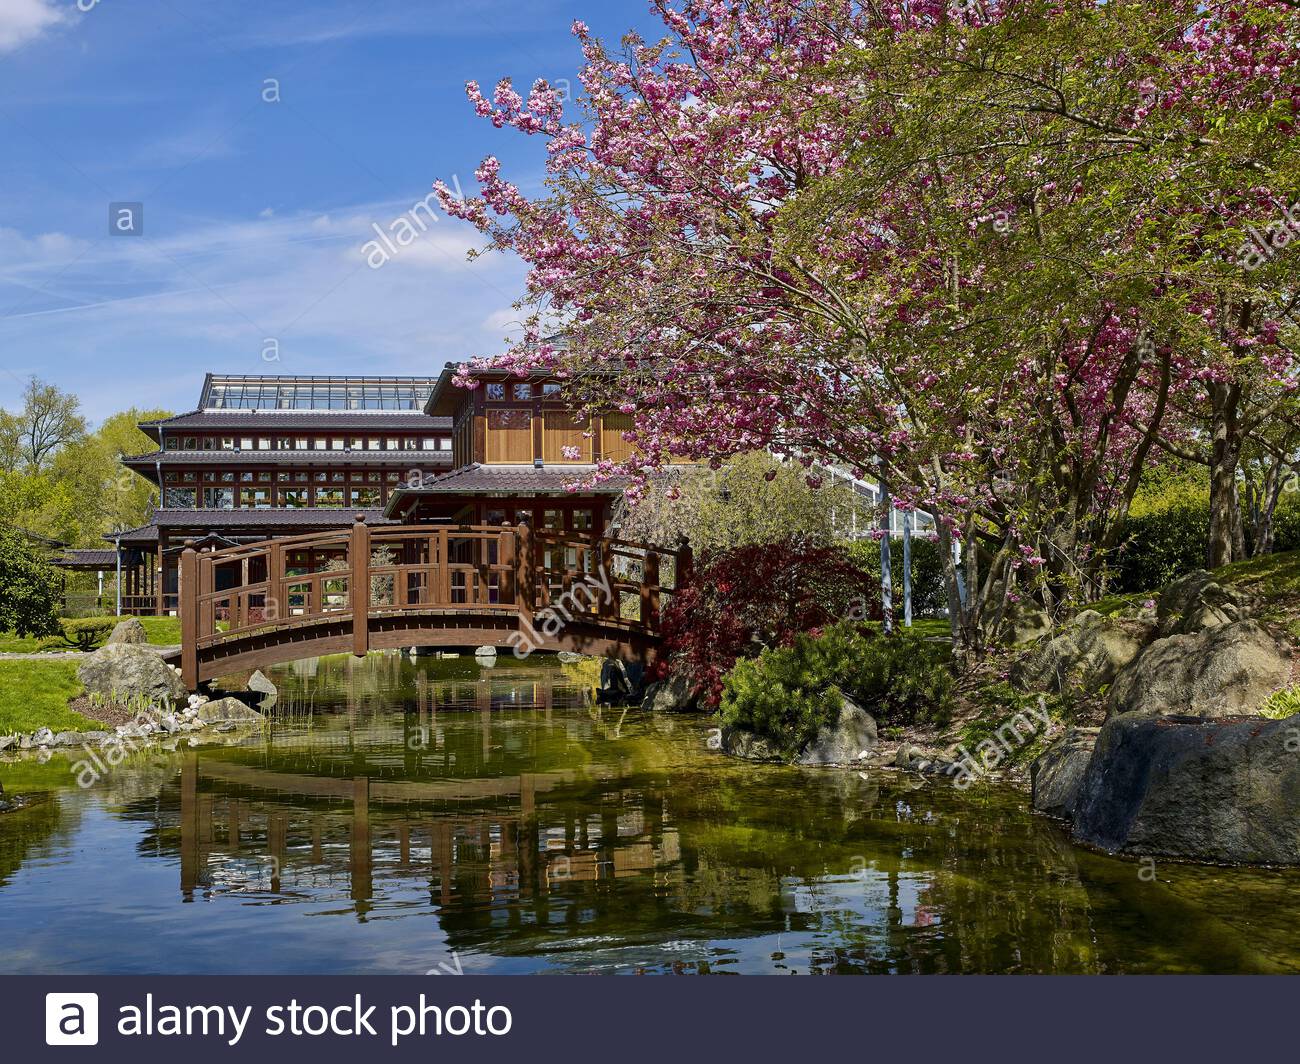 japanese garden in bad langensalzathuringiagermany 2B13YJX